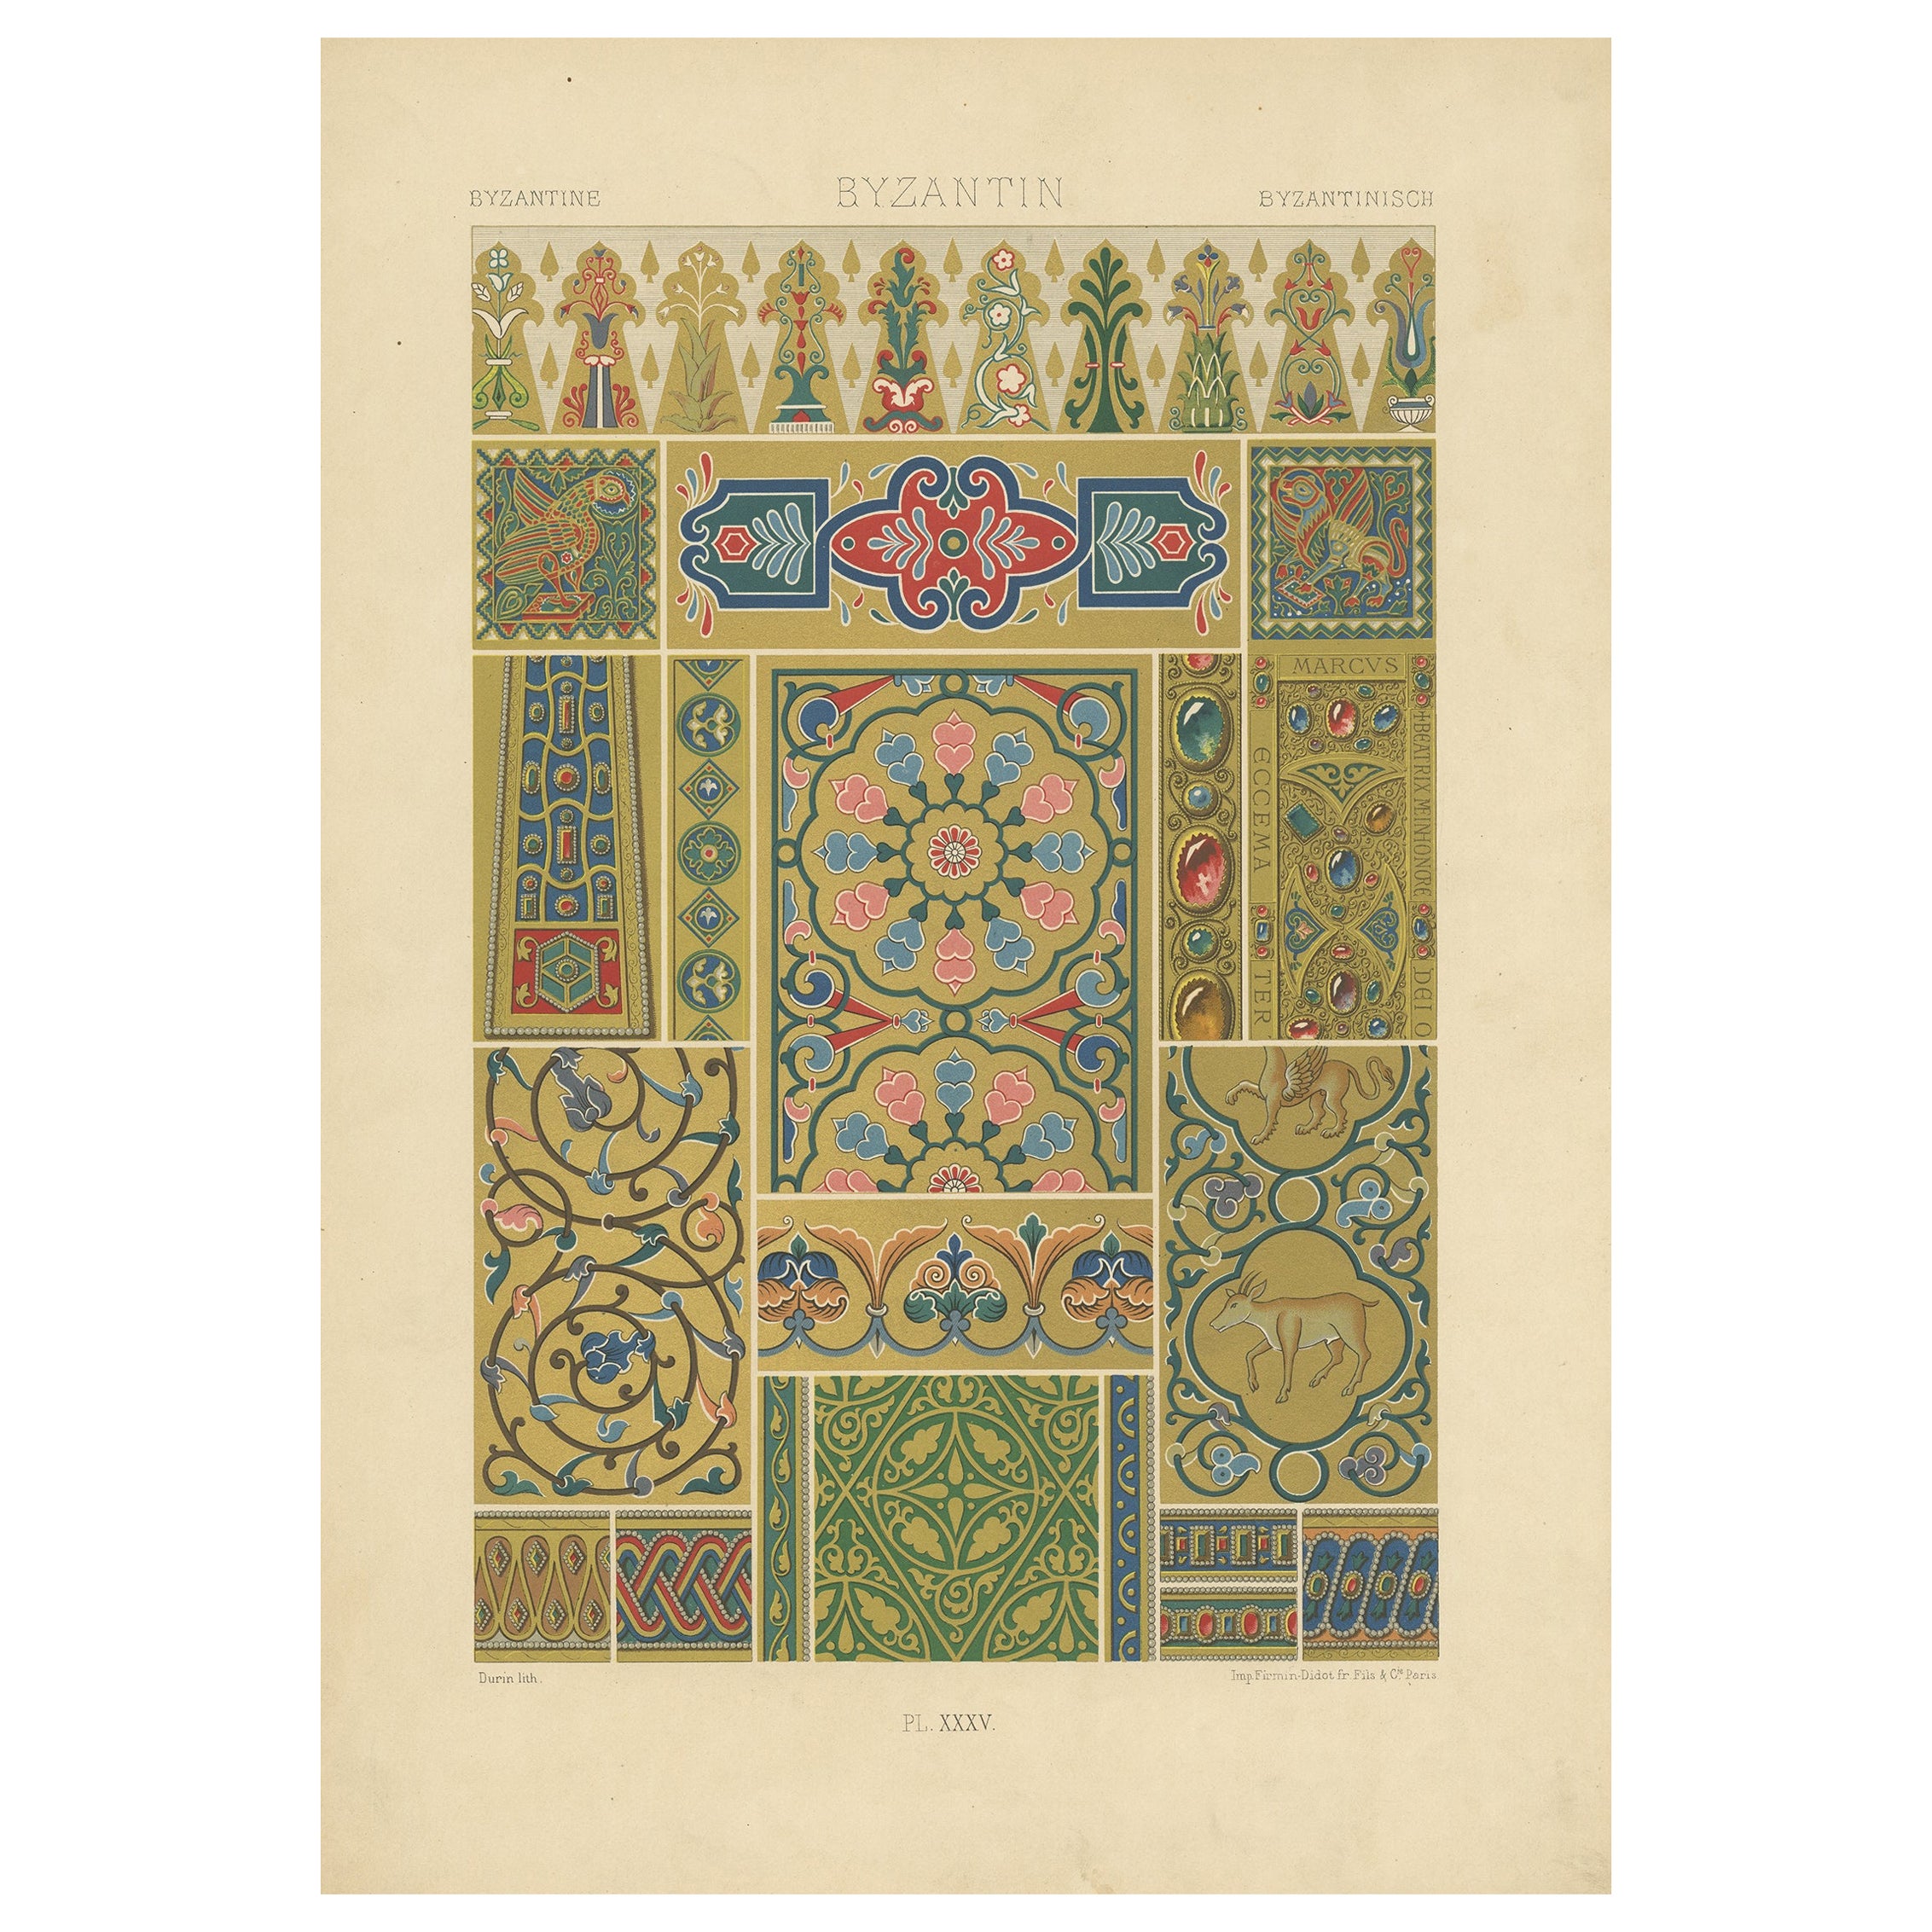 Original Antique Print of Byzantine Decorative Art, 1869